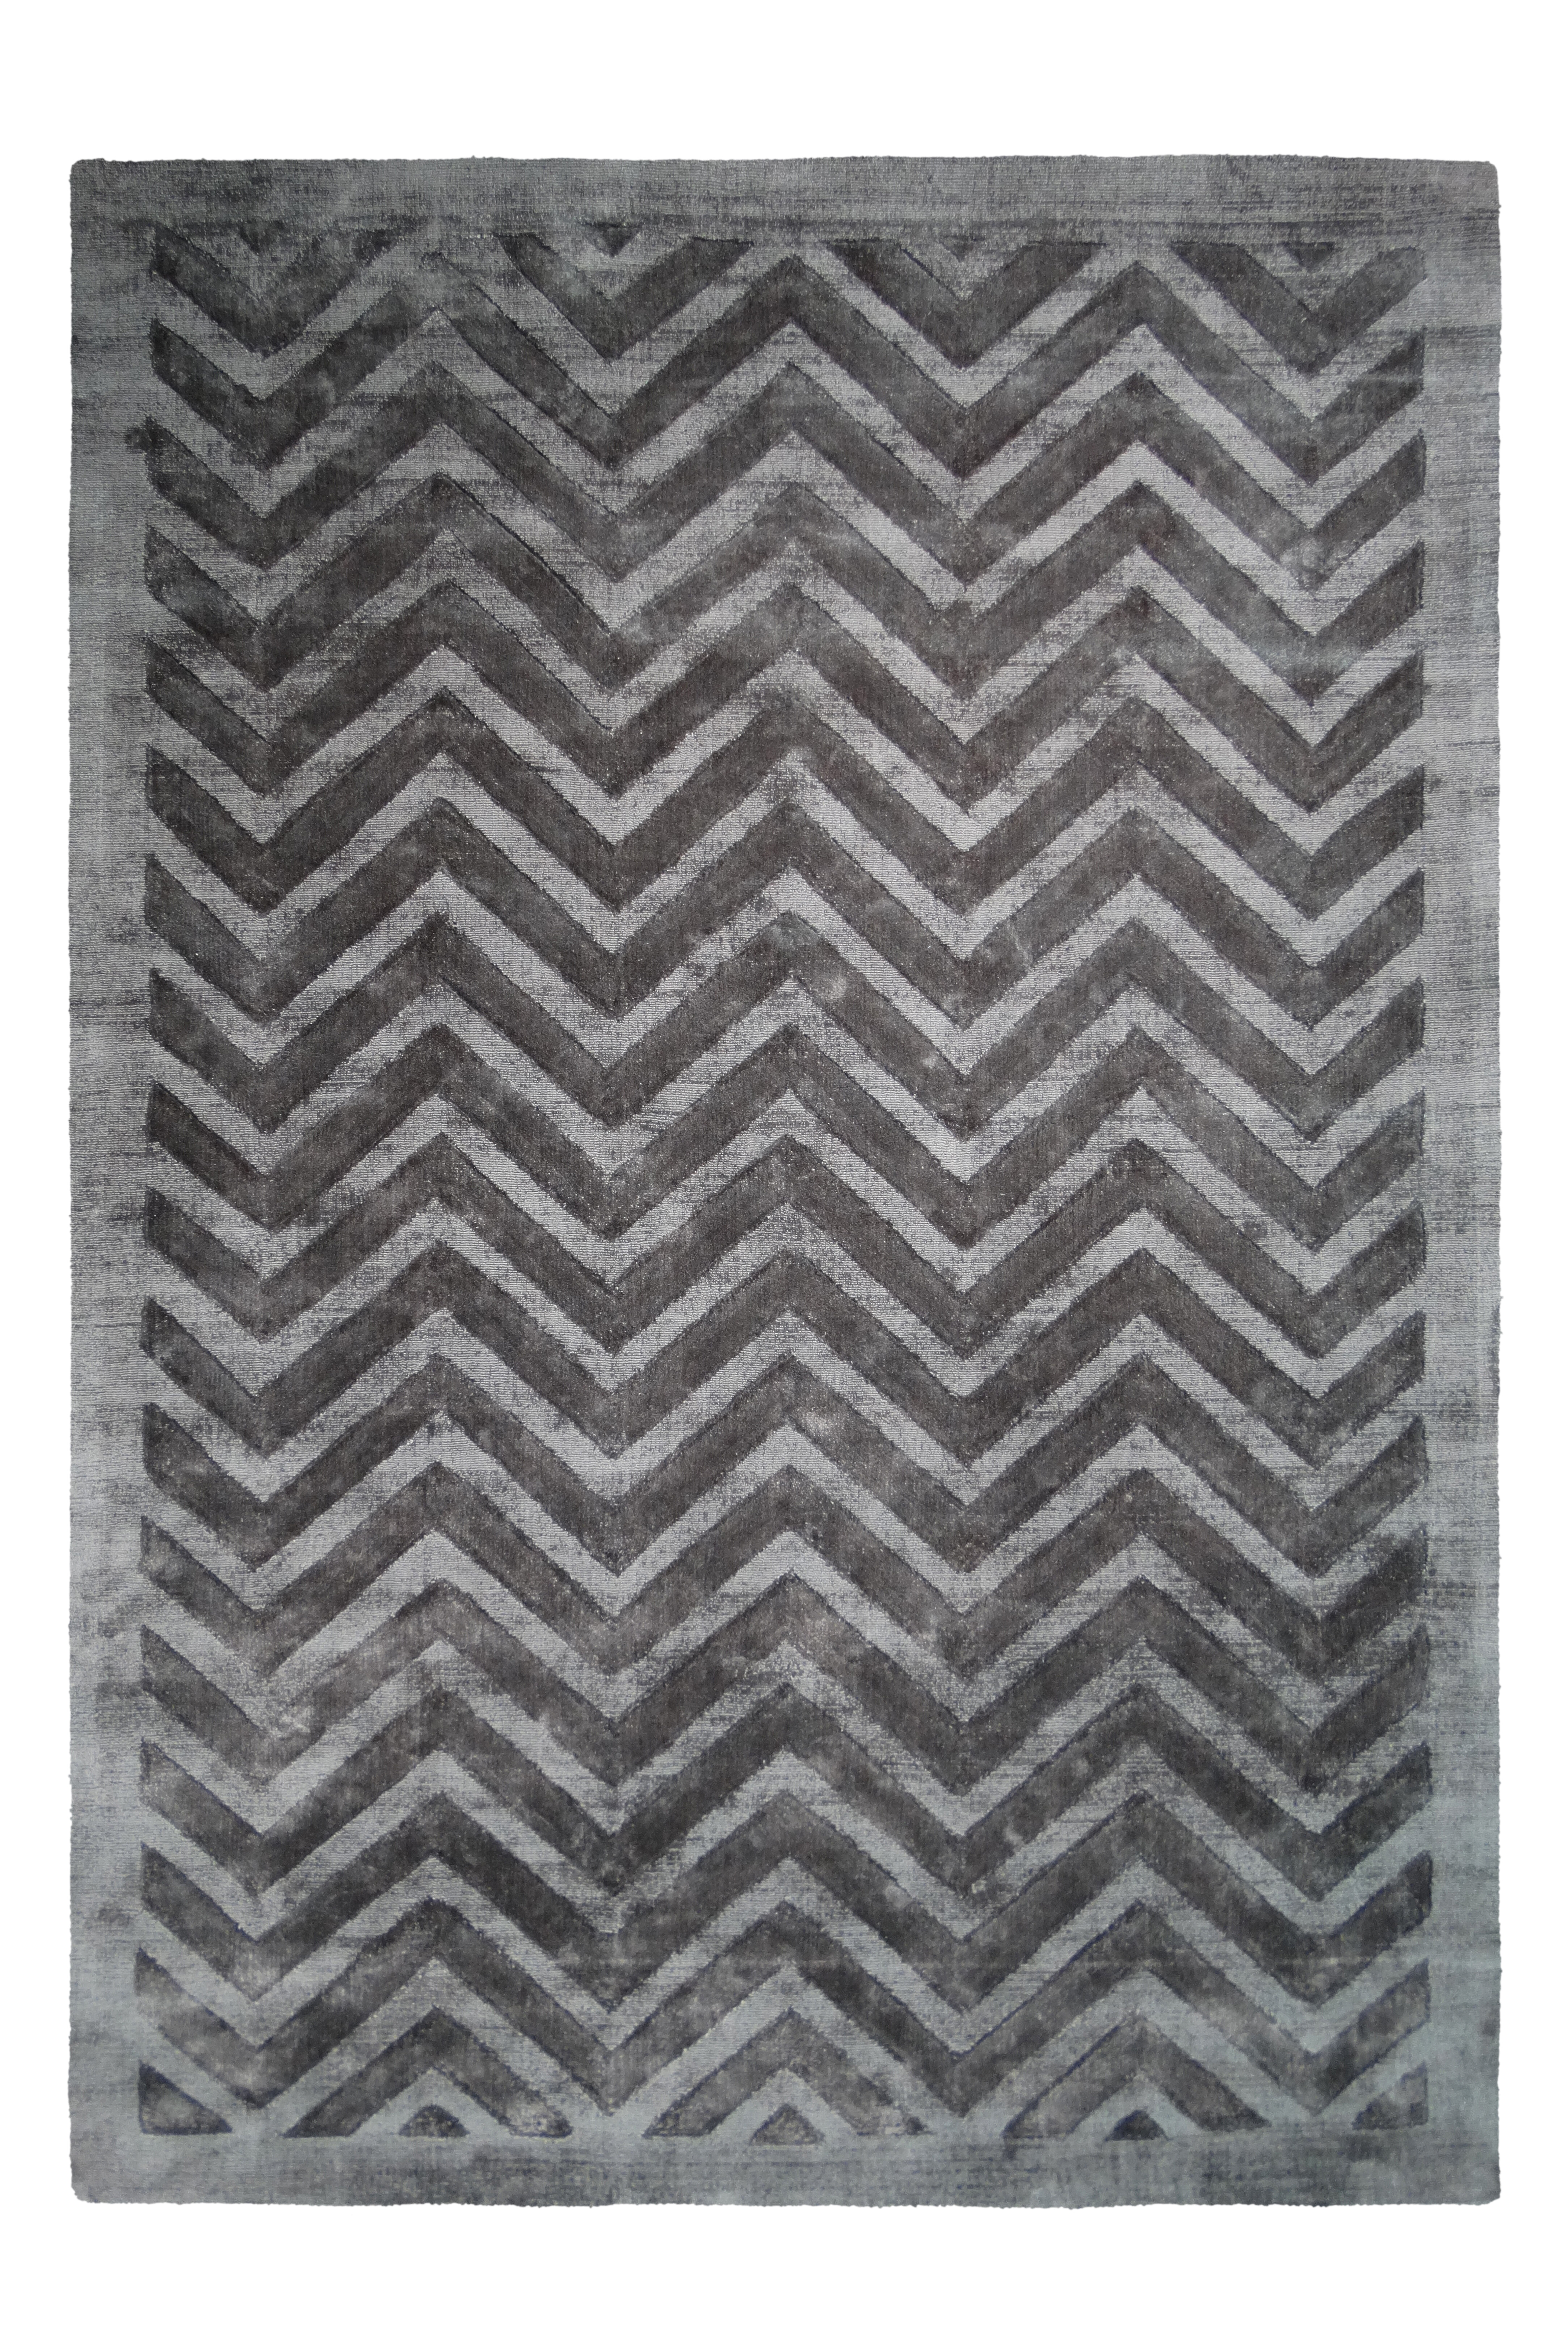 Kayoom Vloerkleed 'Luxury 410' kleur Grijs - Antraciet, 120 x 170cm